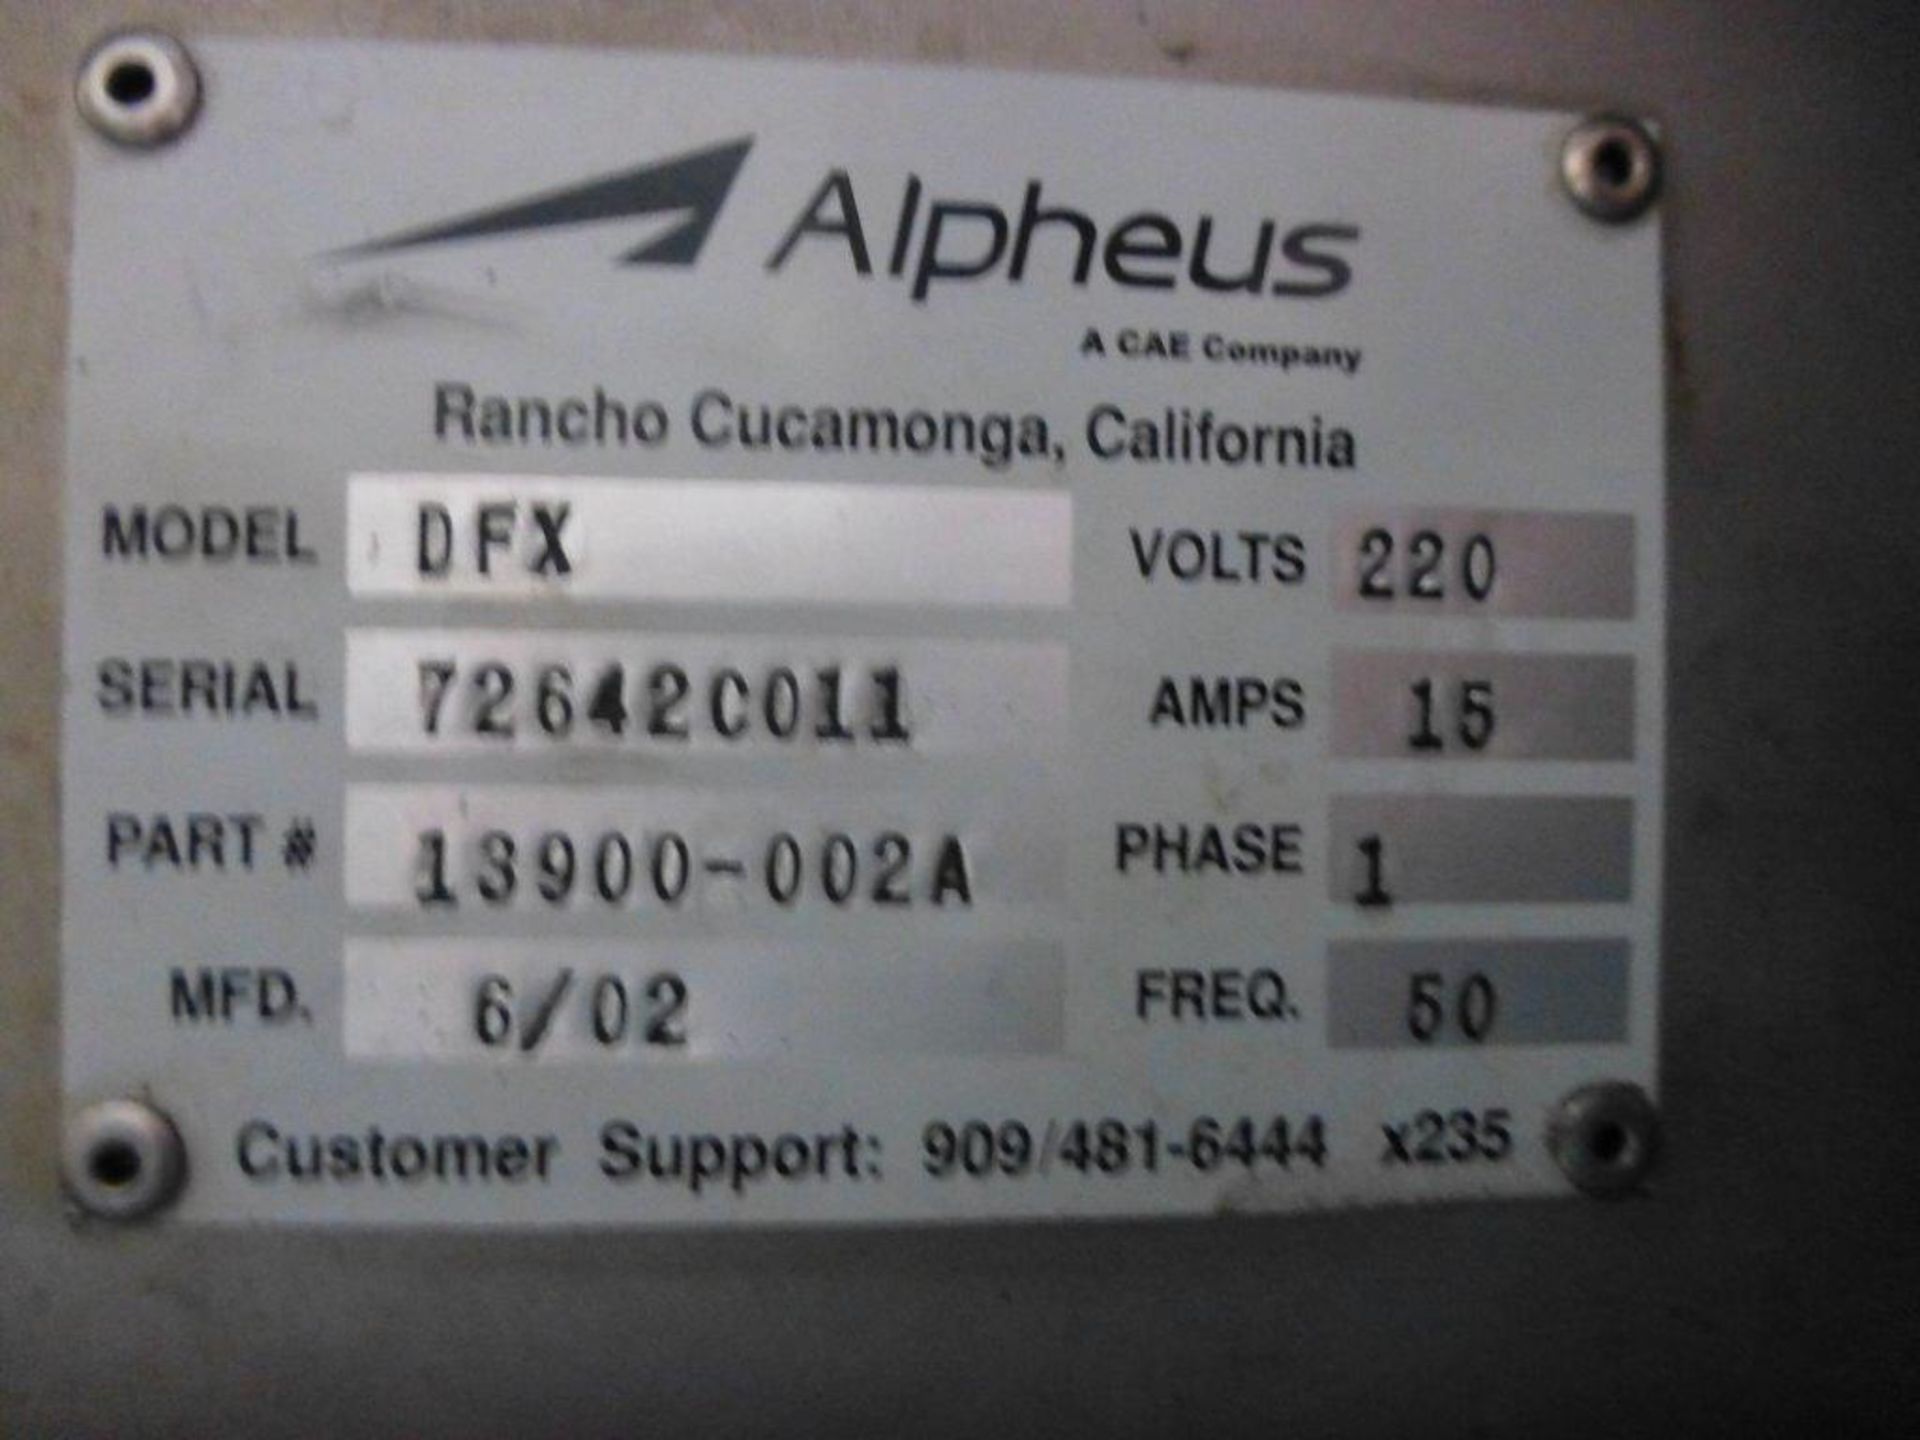 Alpheus Power DFX hyper-velocity dry ice blasting unit serial No 72624C011 (2002) with gun - Image 3 of 3